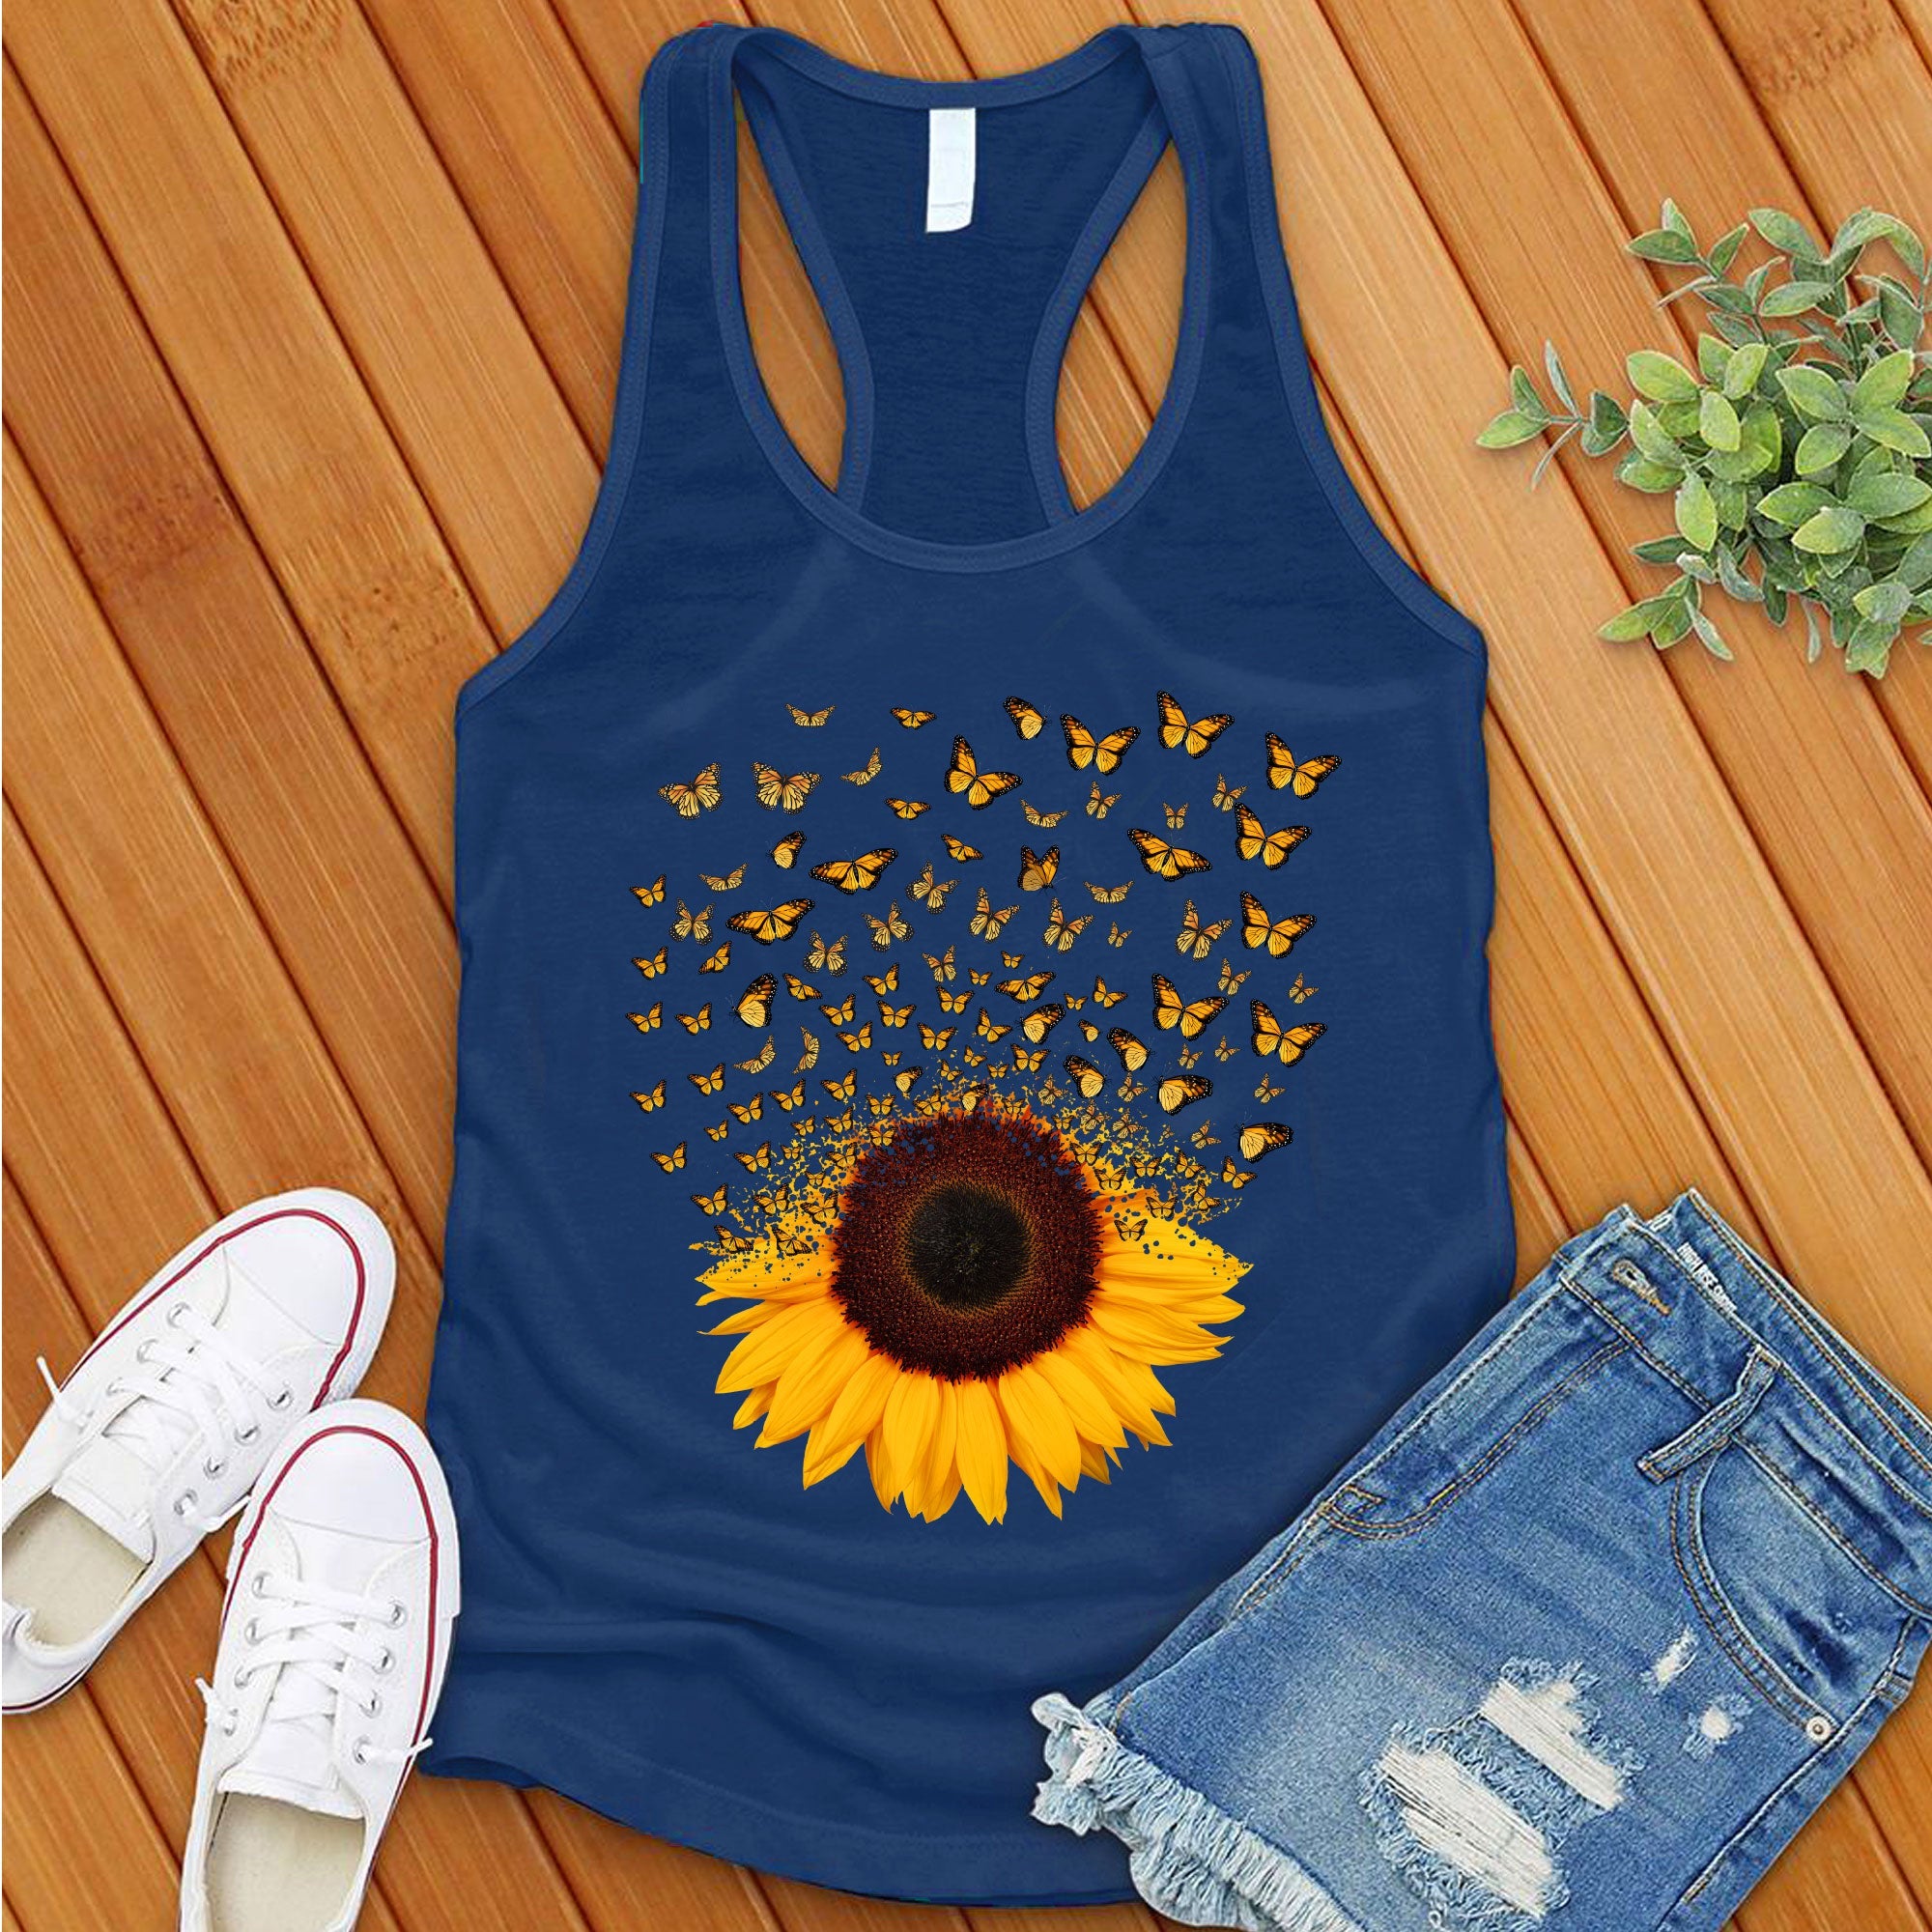 Adorable Butterfly Sunflower Women's Tank Top - Love Tees